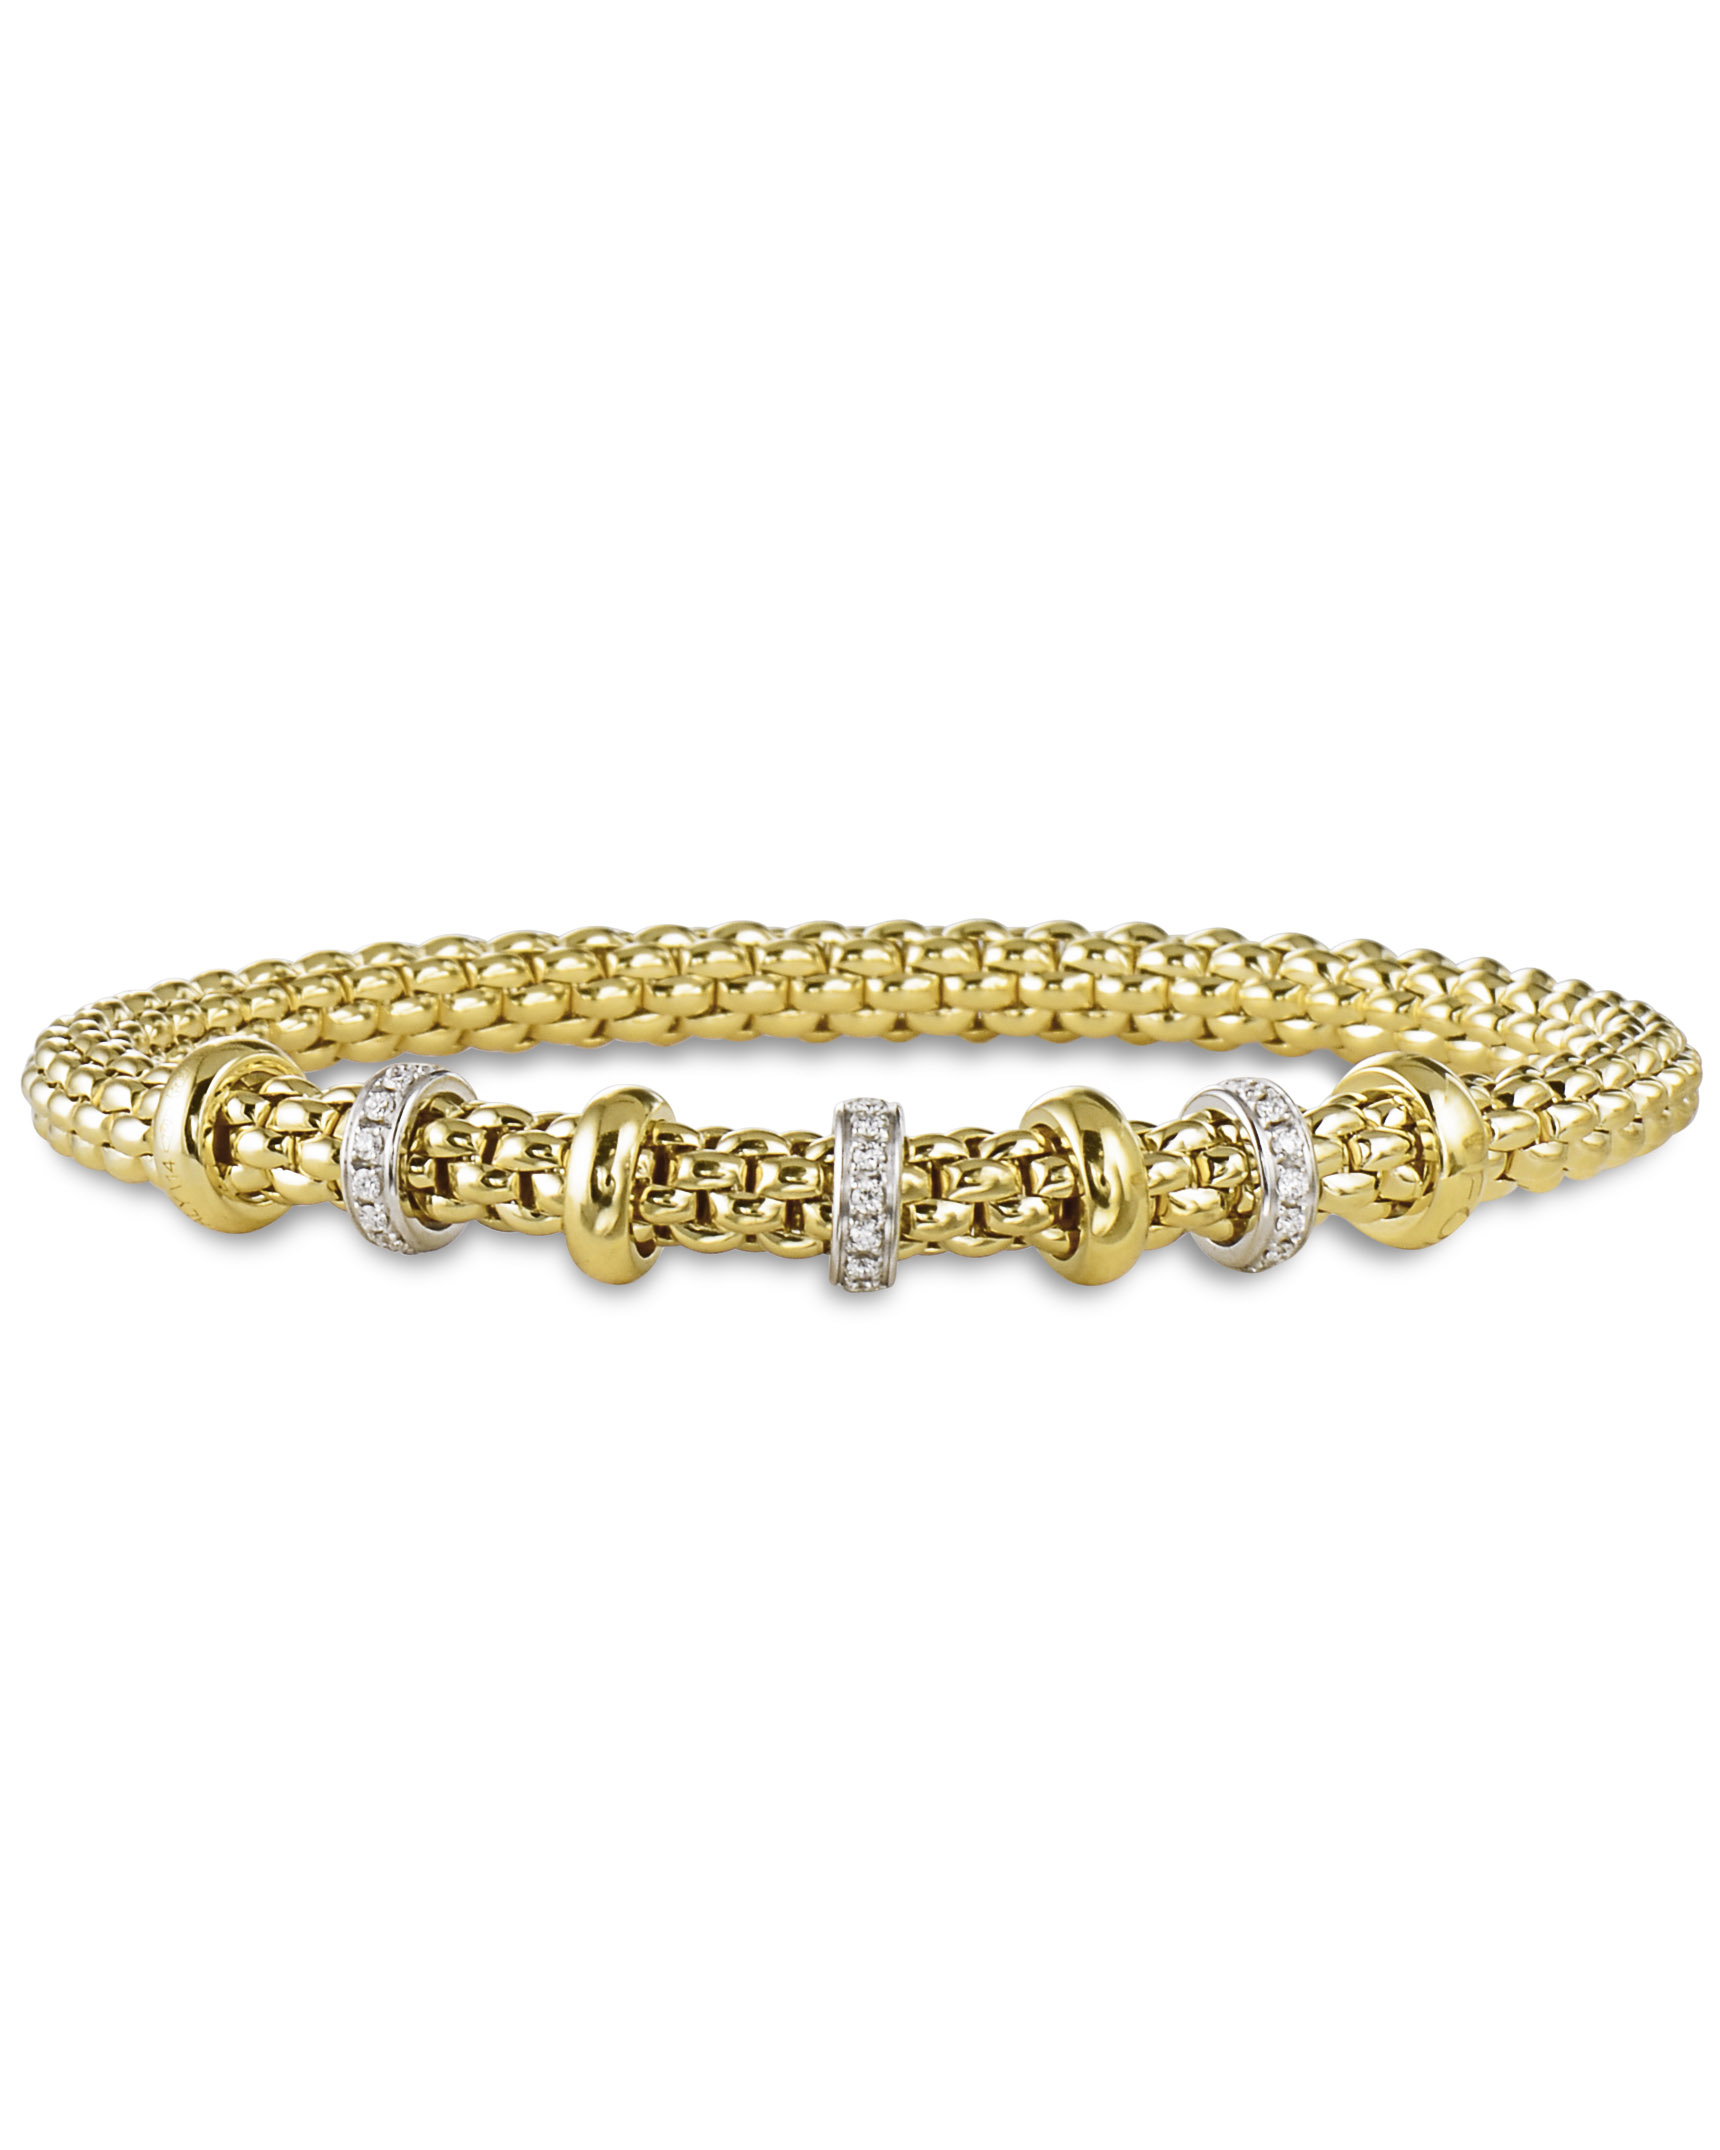 2-Row Diamond and 18K Yellow Gold Flexible Bracelet - Turgeon Raine